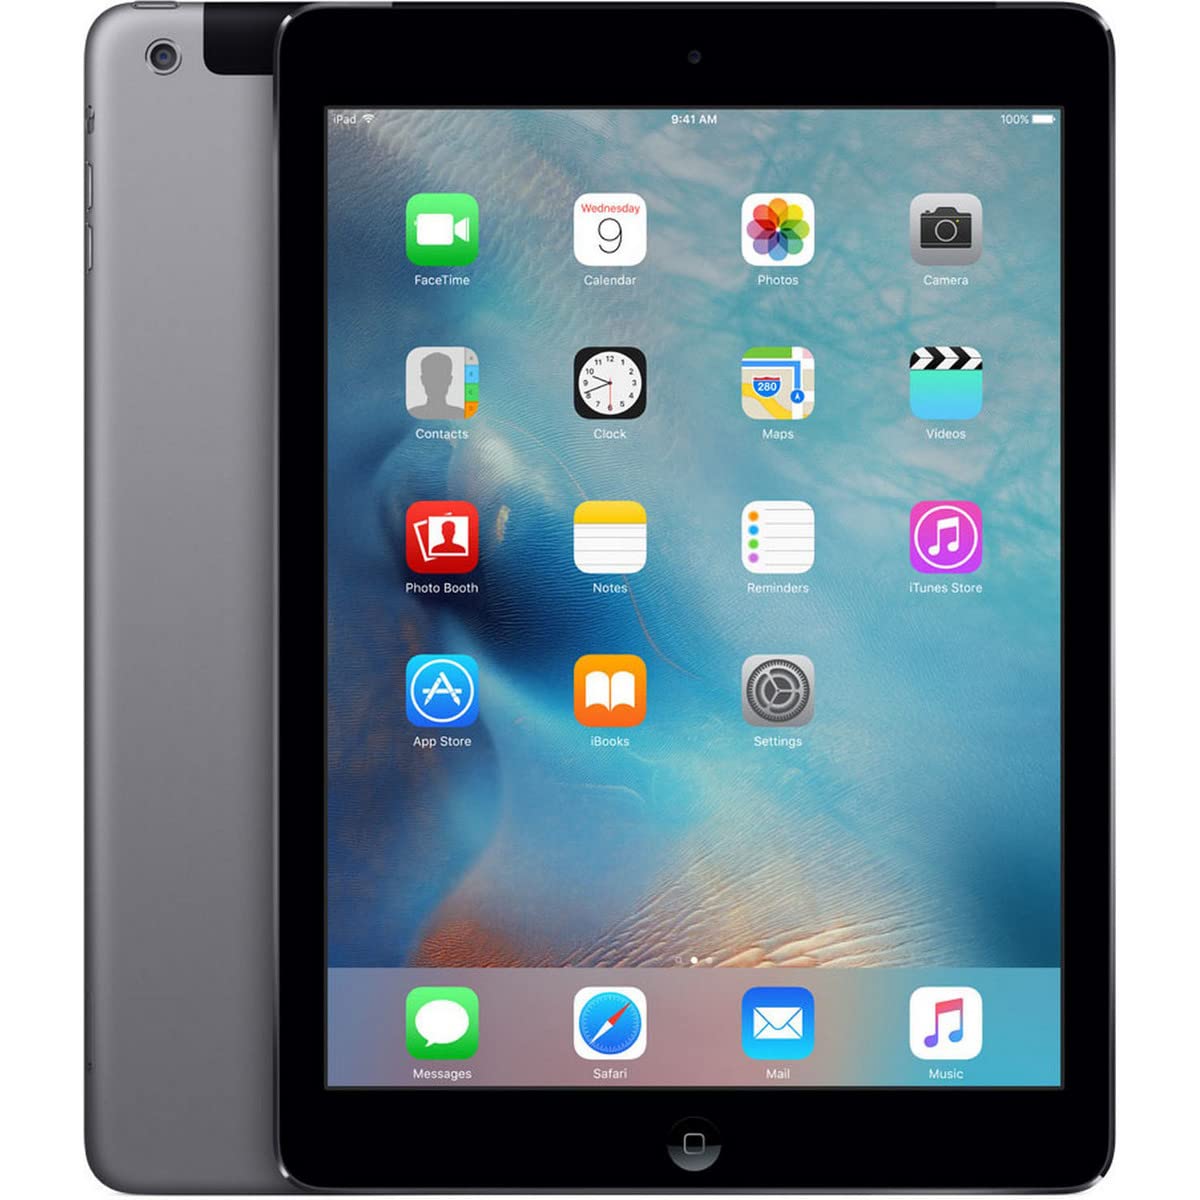 Apple iPad Air 2 a1567 16GB Space Gray Tablet WiFi + 4G Unlocked GSM/CDMA - Smart Tech Shopping